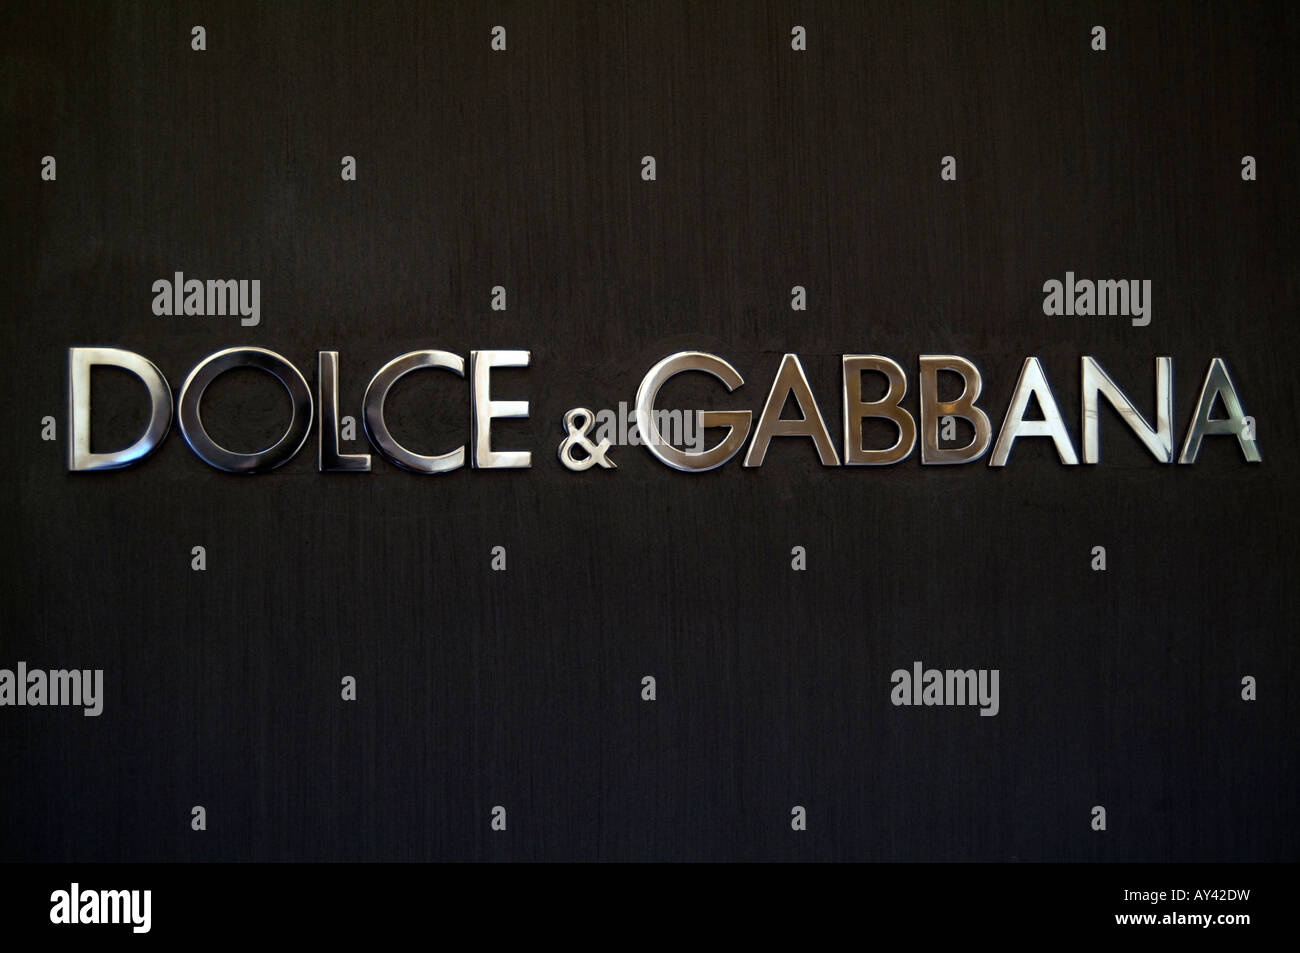 Dolce Gabbana Sign Stock Photos & Dolce Gabbana Sign Stock Images - Alamy